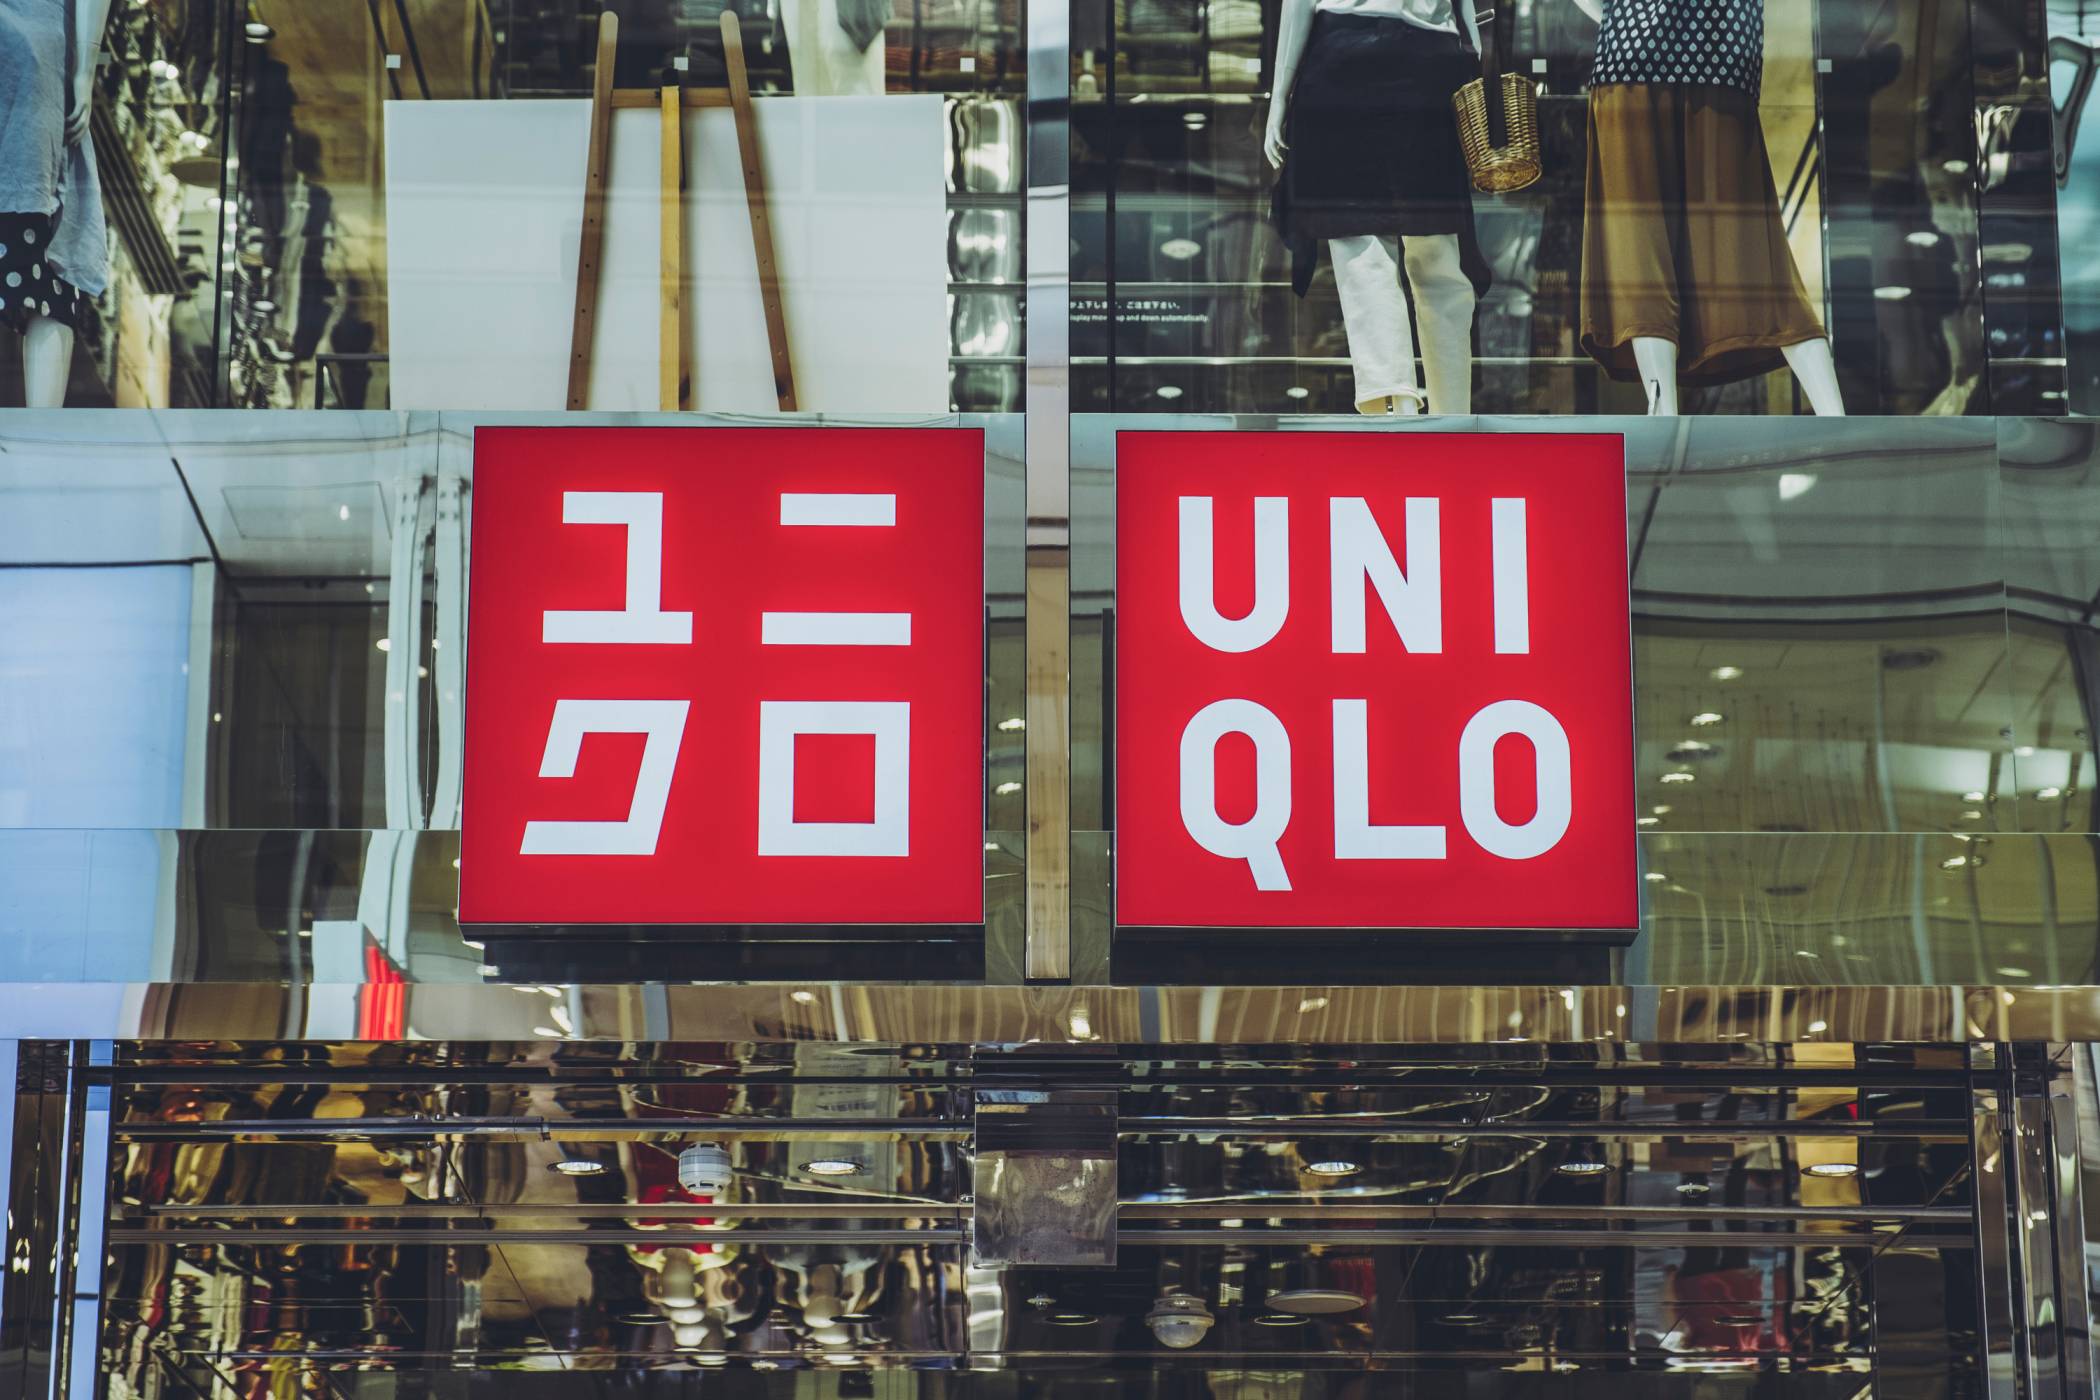 5 Reasons Why Uniqlos Marketing Strategy Works